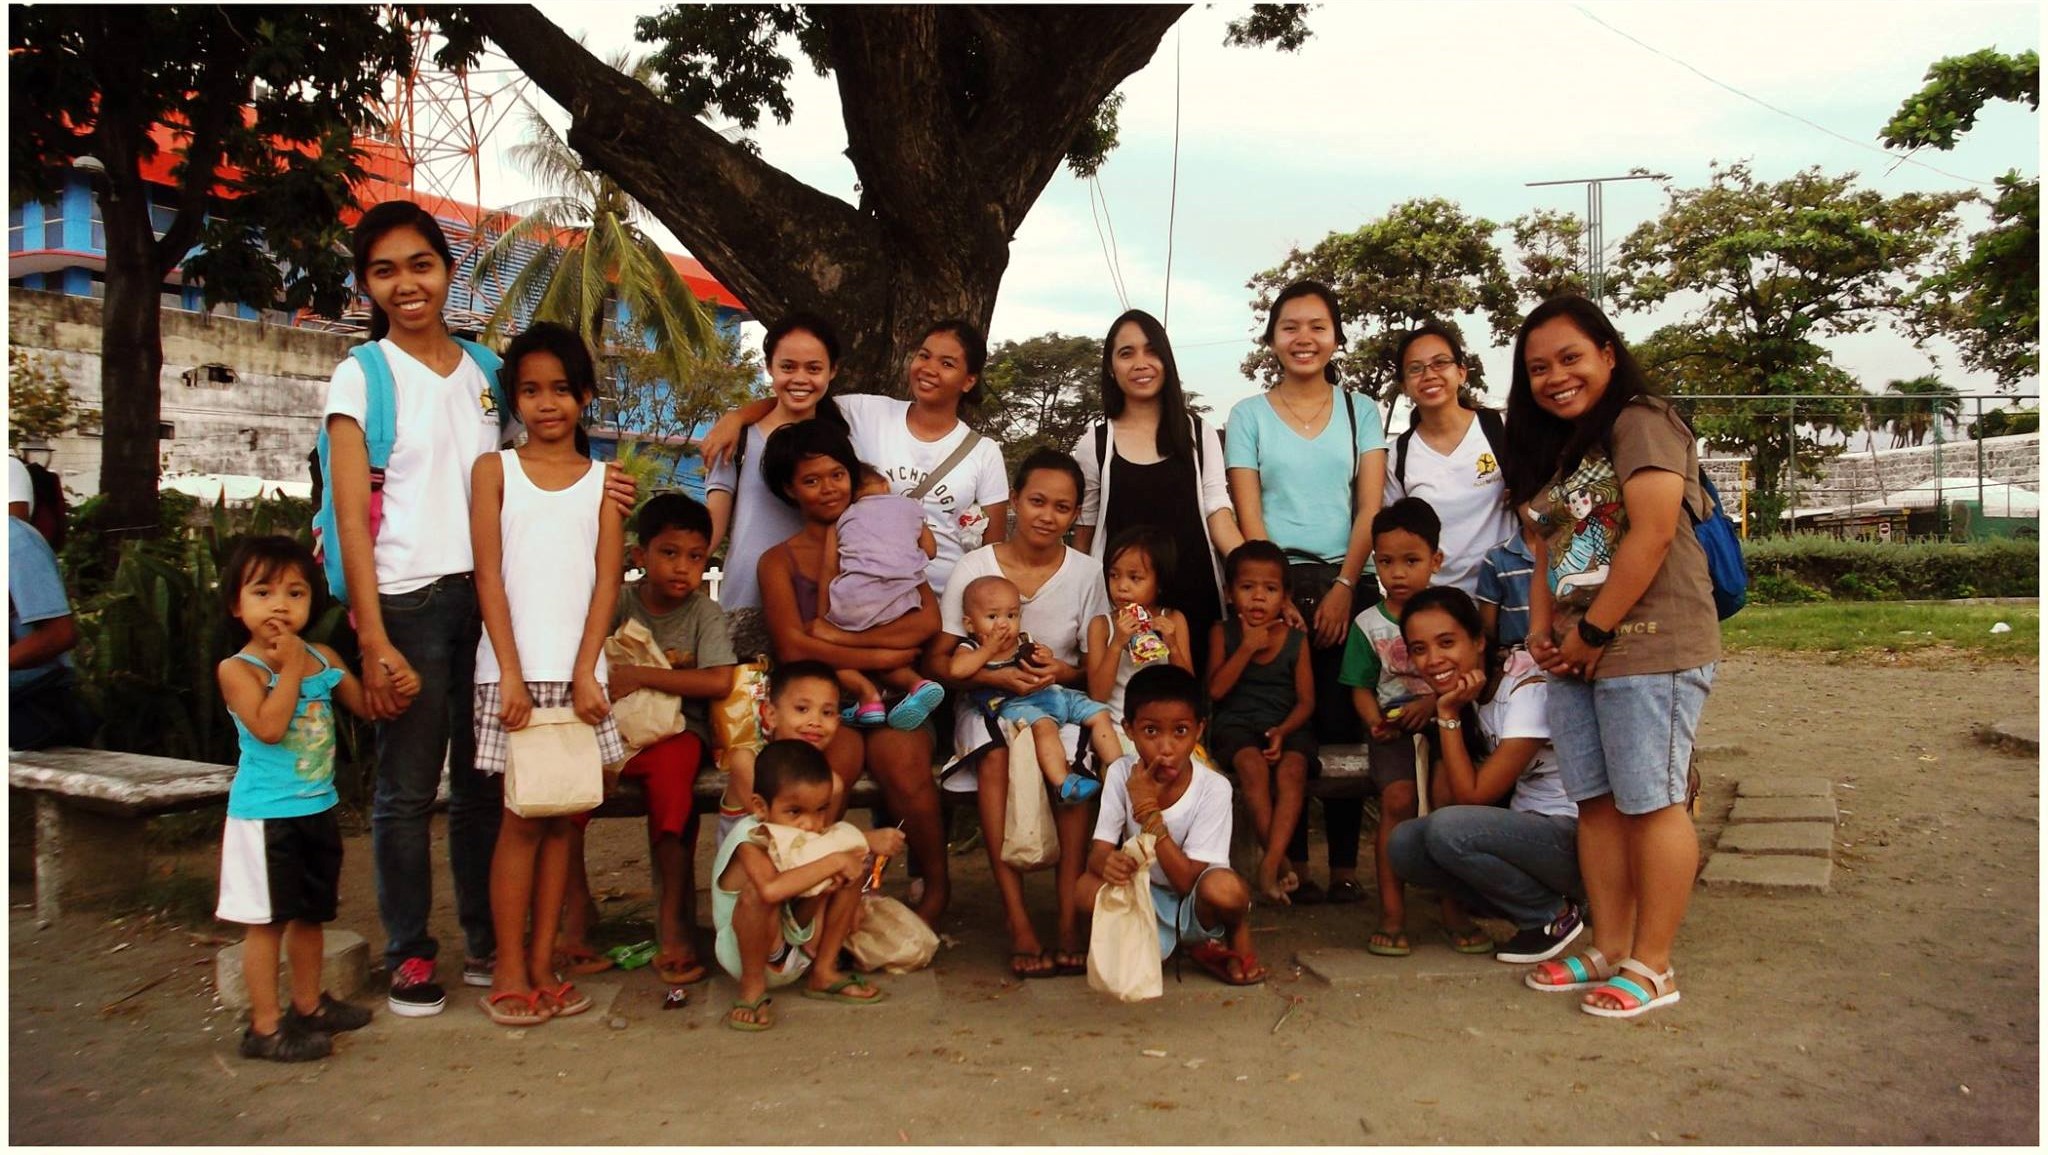 The Joy of Giving: Christmas in Cebu